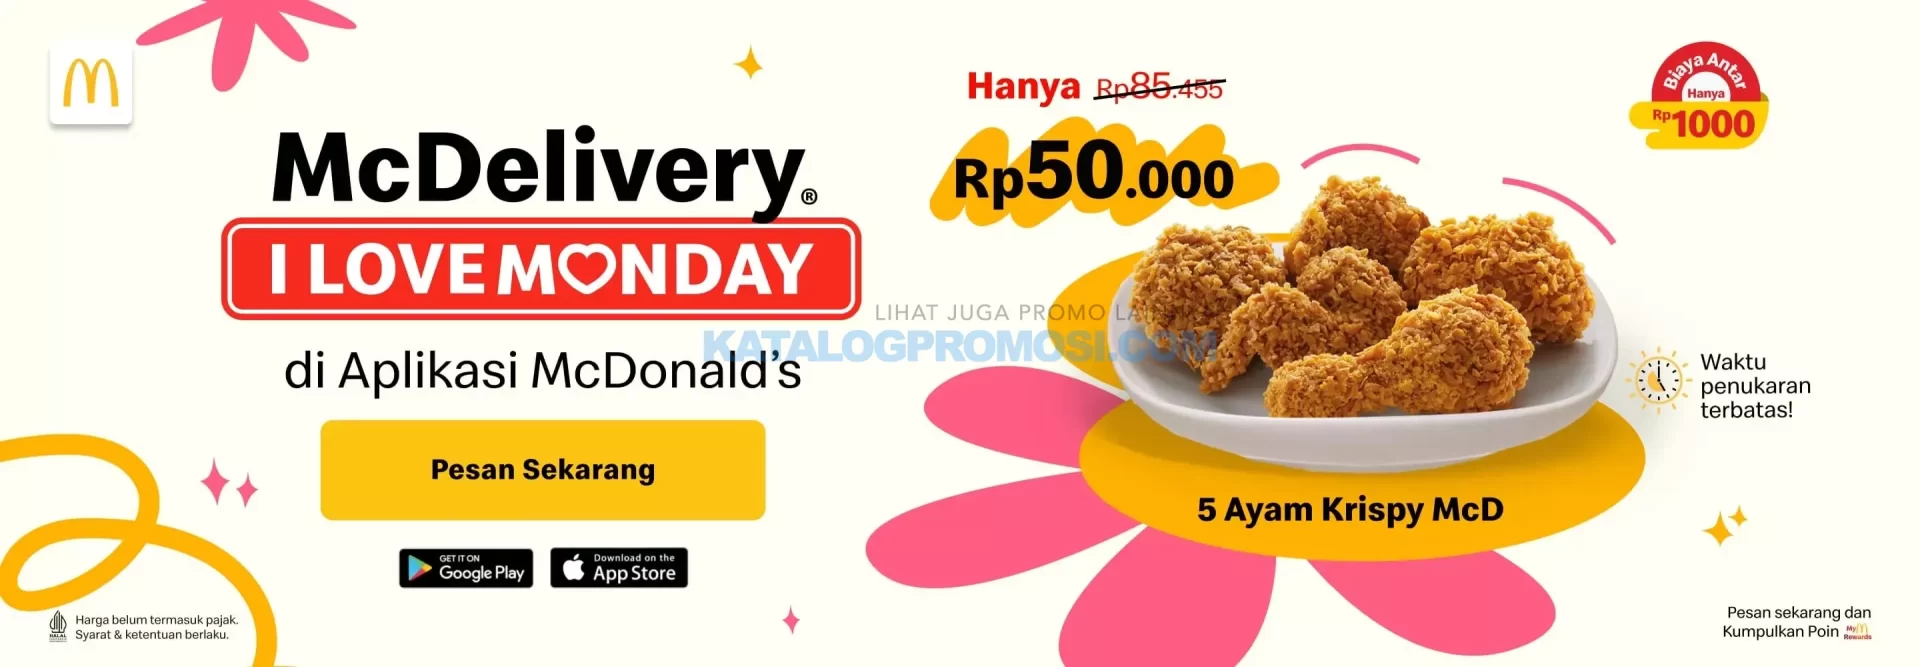 Promo MCDONALDS I LOVE MONDAY - Paket 5 Ayam Krispy McD cuma Rp 50.000